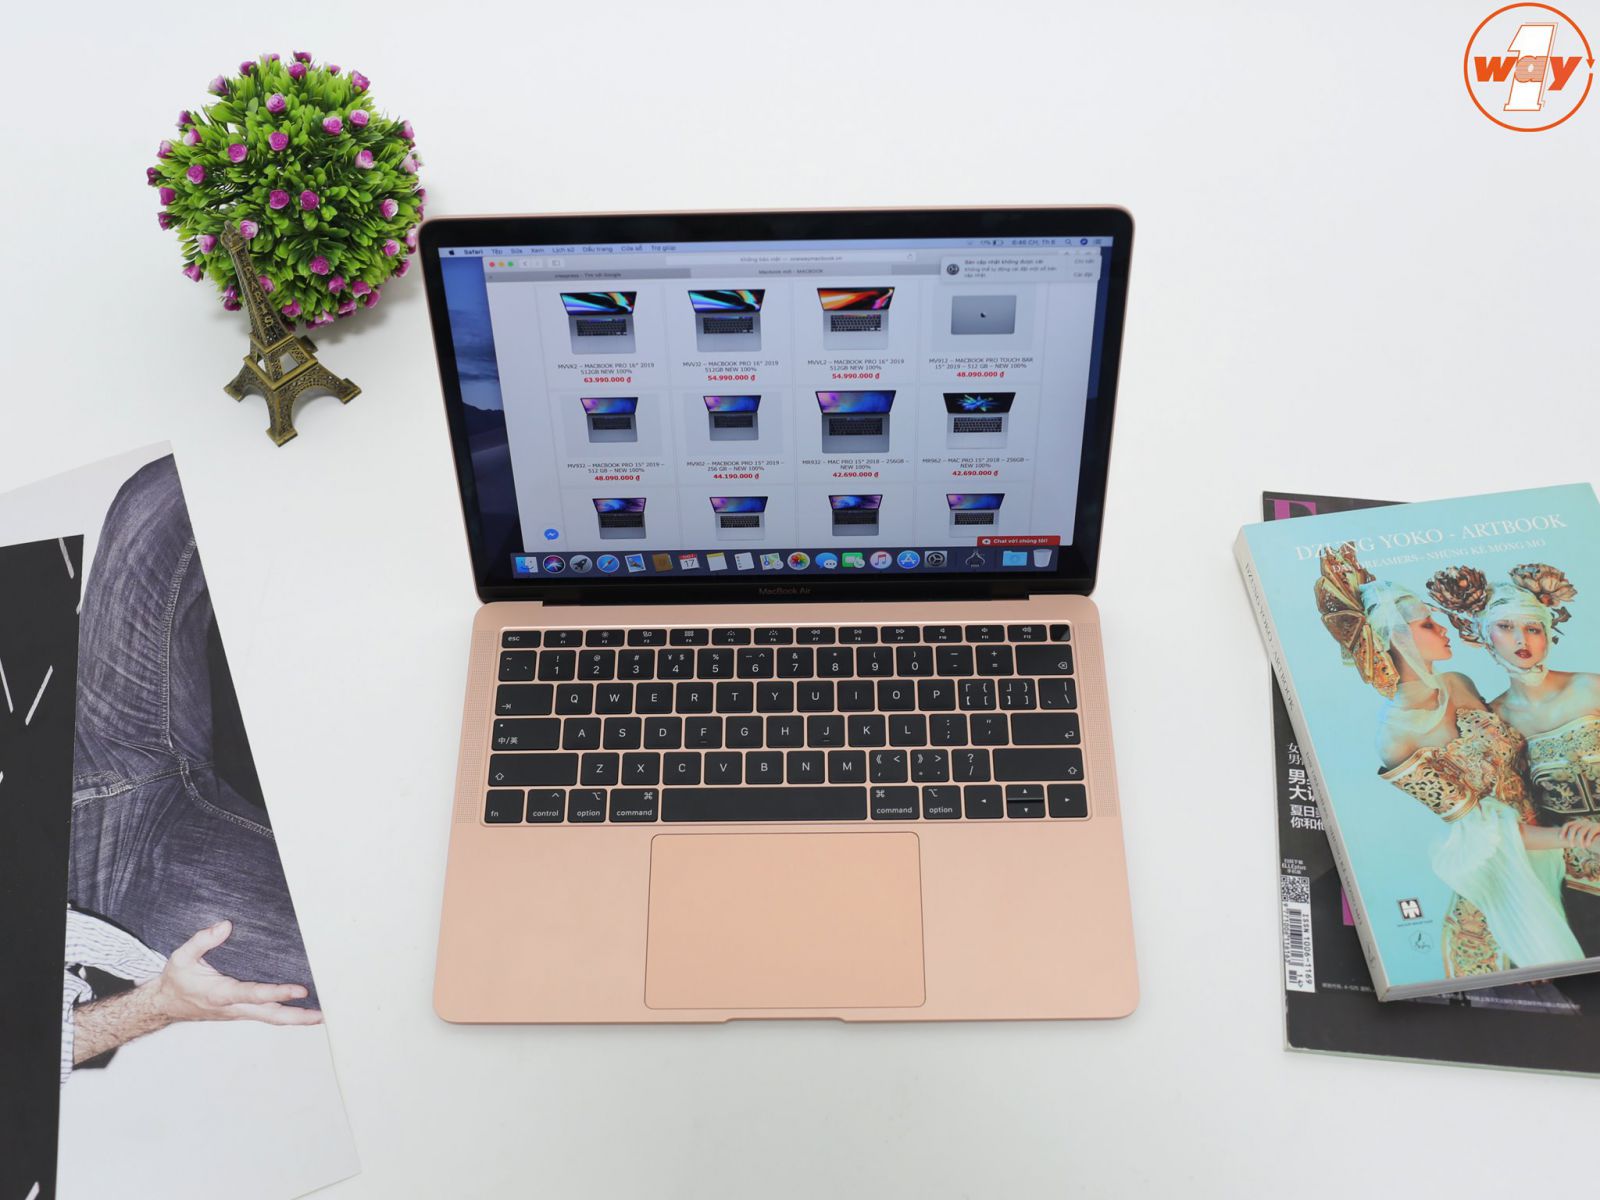 MacBook Air đời 2018 - 13 inch - 256GB MREF2 cũ